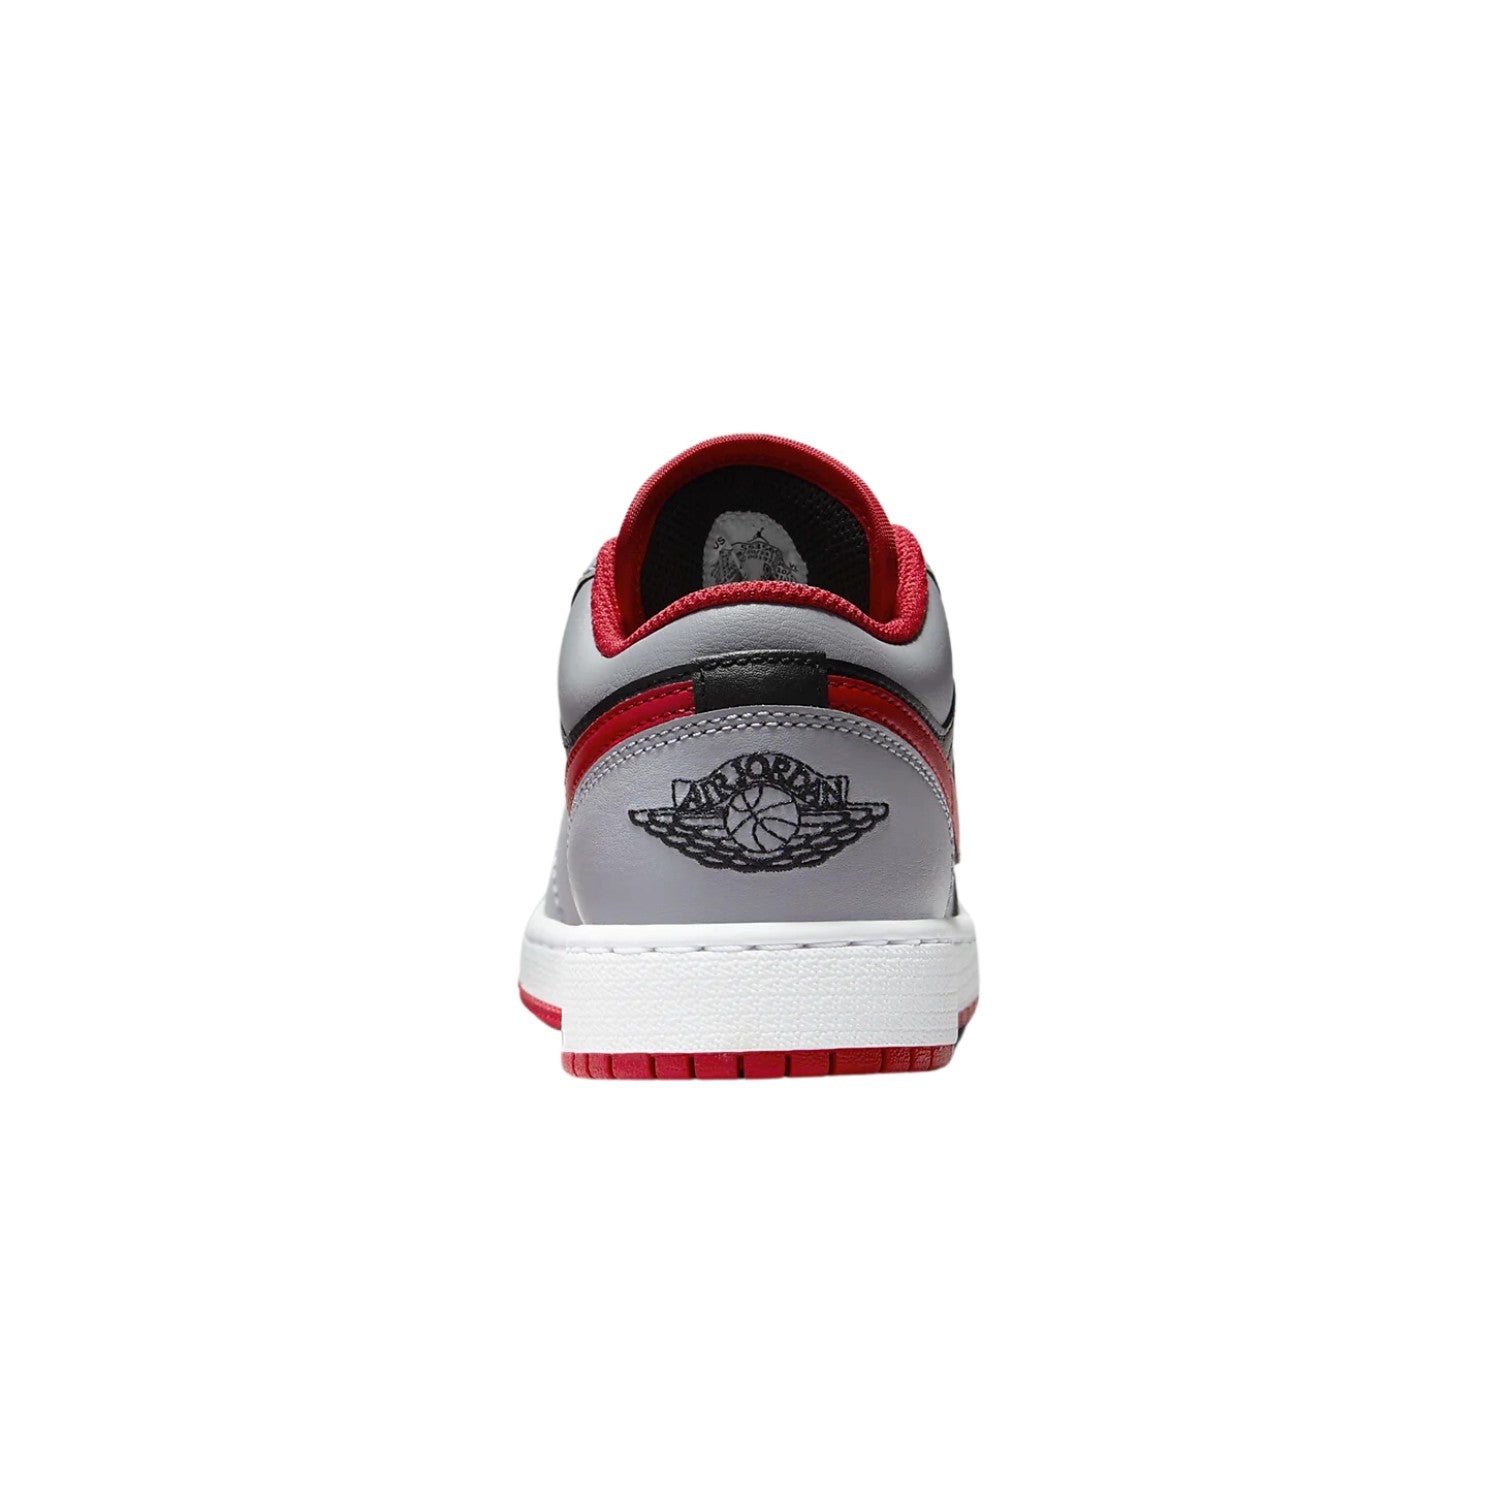 Air Jordan 1 LoW "Reverse Bred" (Gs) Big Kids Style : 553560